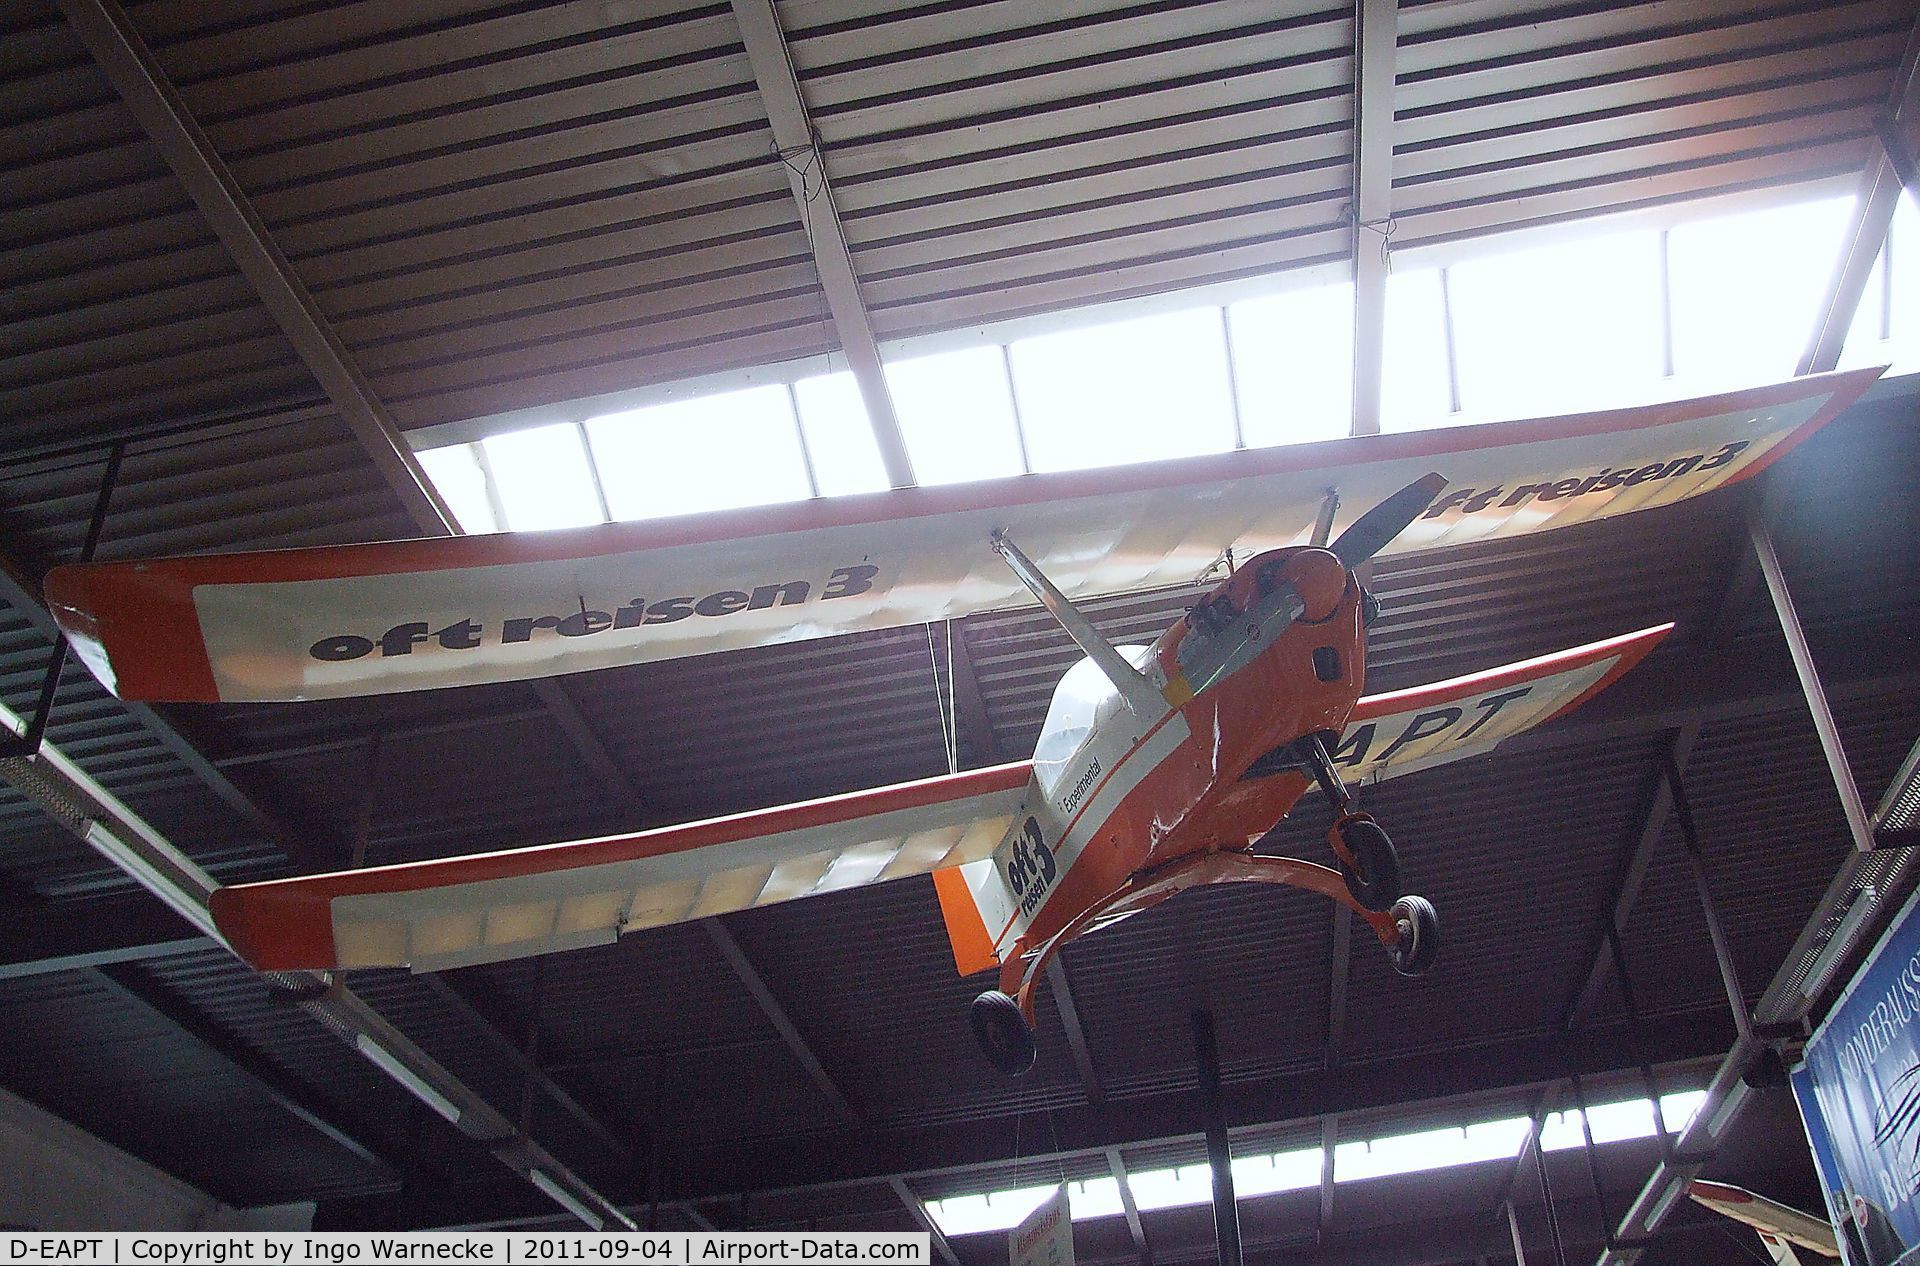 D-EAPT, Frebel F5 Aeolus C/N 001, Frebel F5 Aeolus at the Auto & Technik Museum, Sinsheim